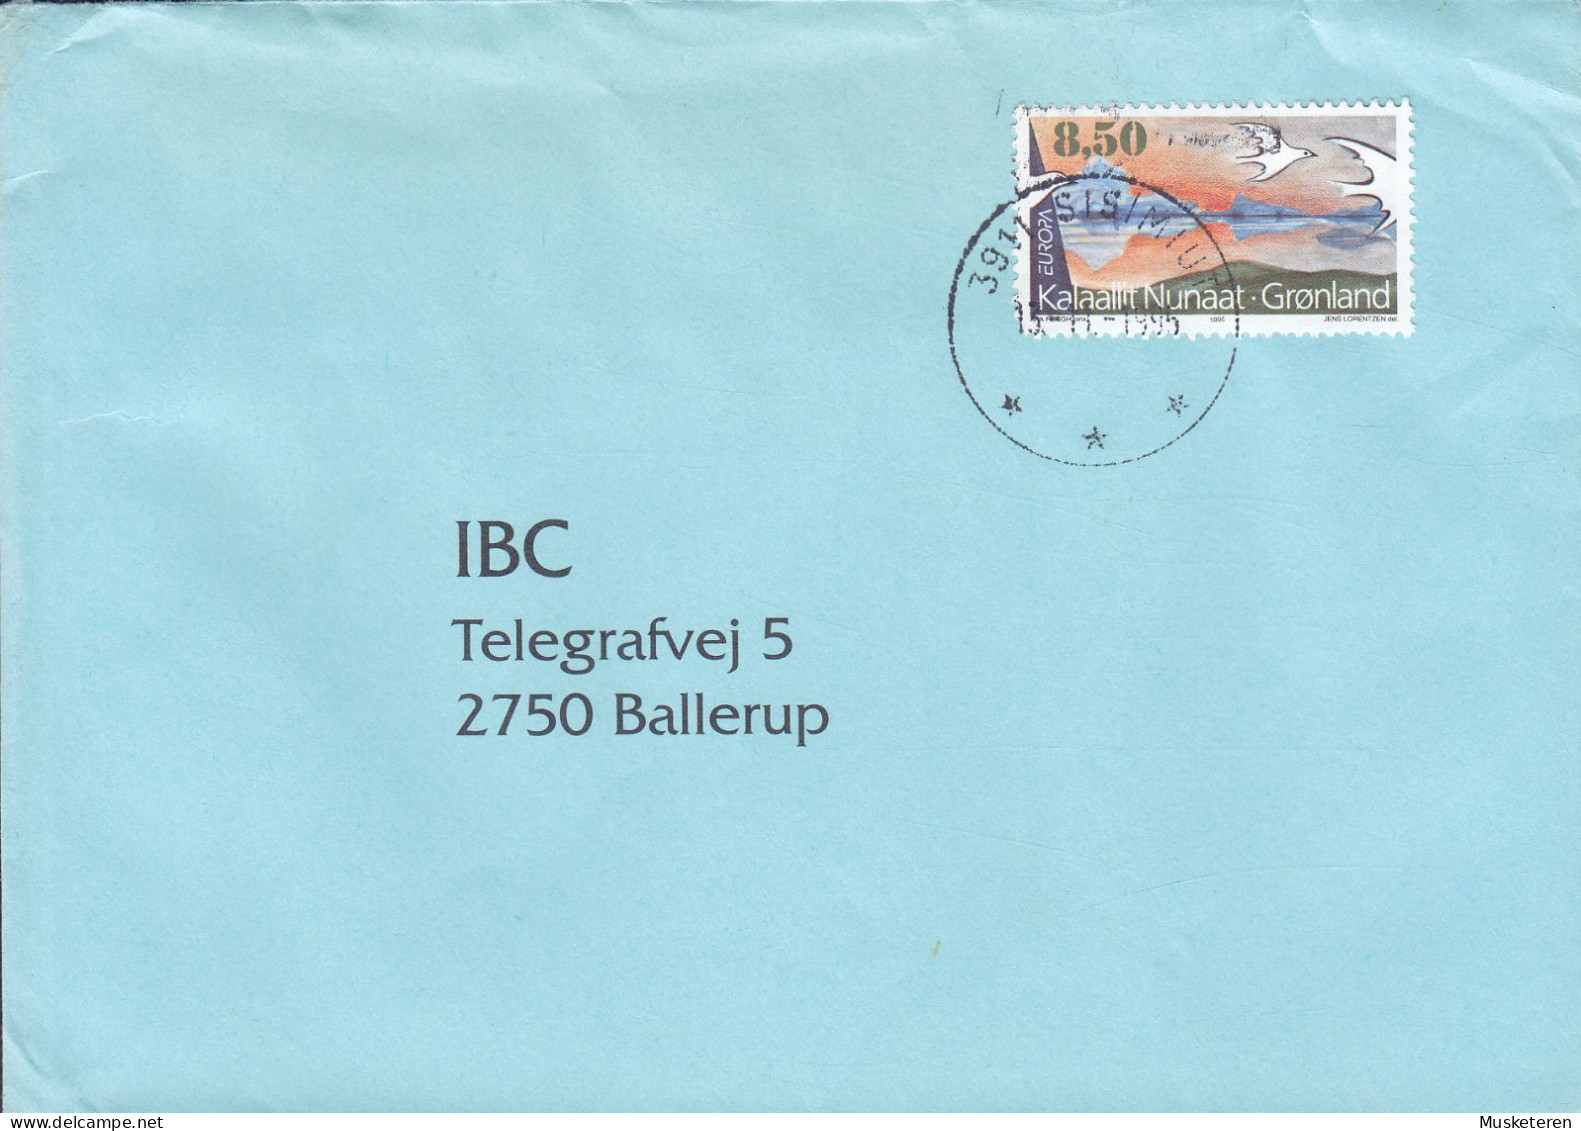 Greenland SISIMIUT 1995 Cover Brief Lettre BALLERUP Denmark 8.50 Kr. Europa CEPT Stamp - Storia Postale